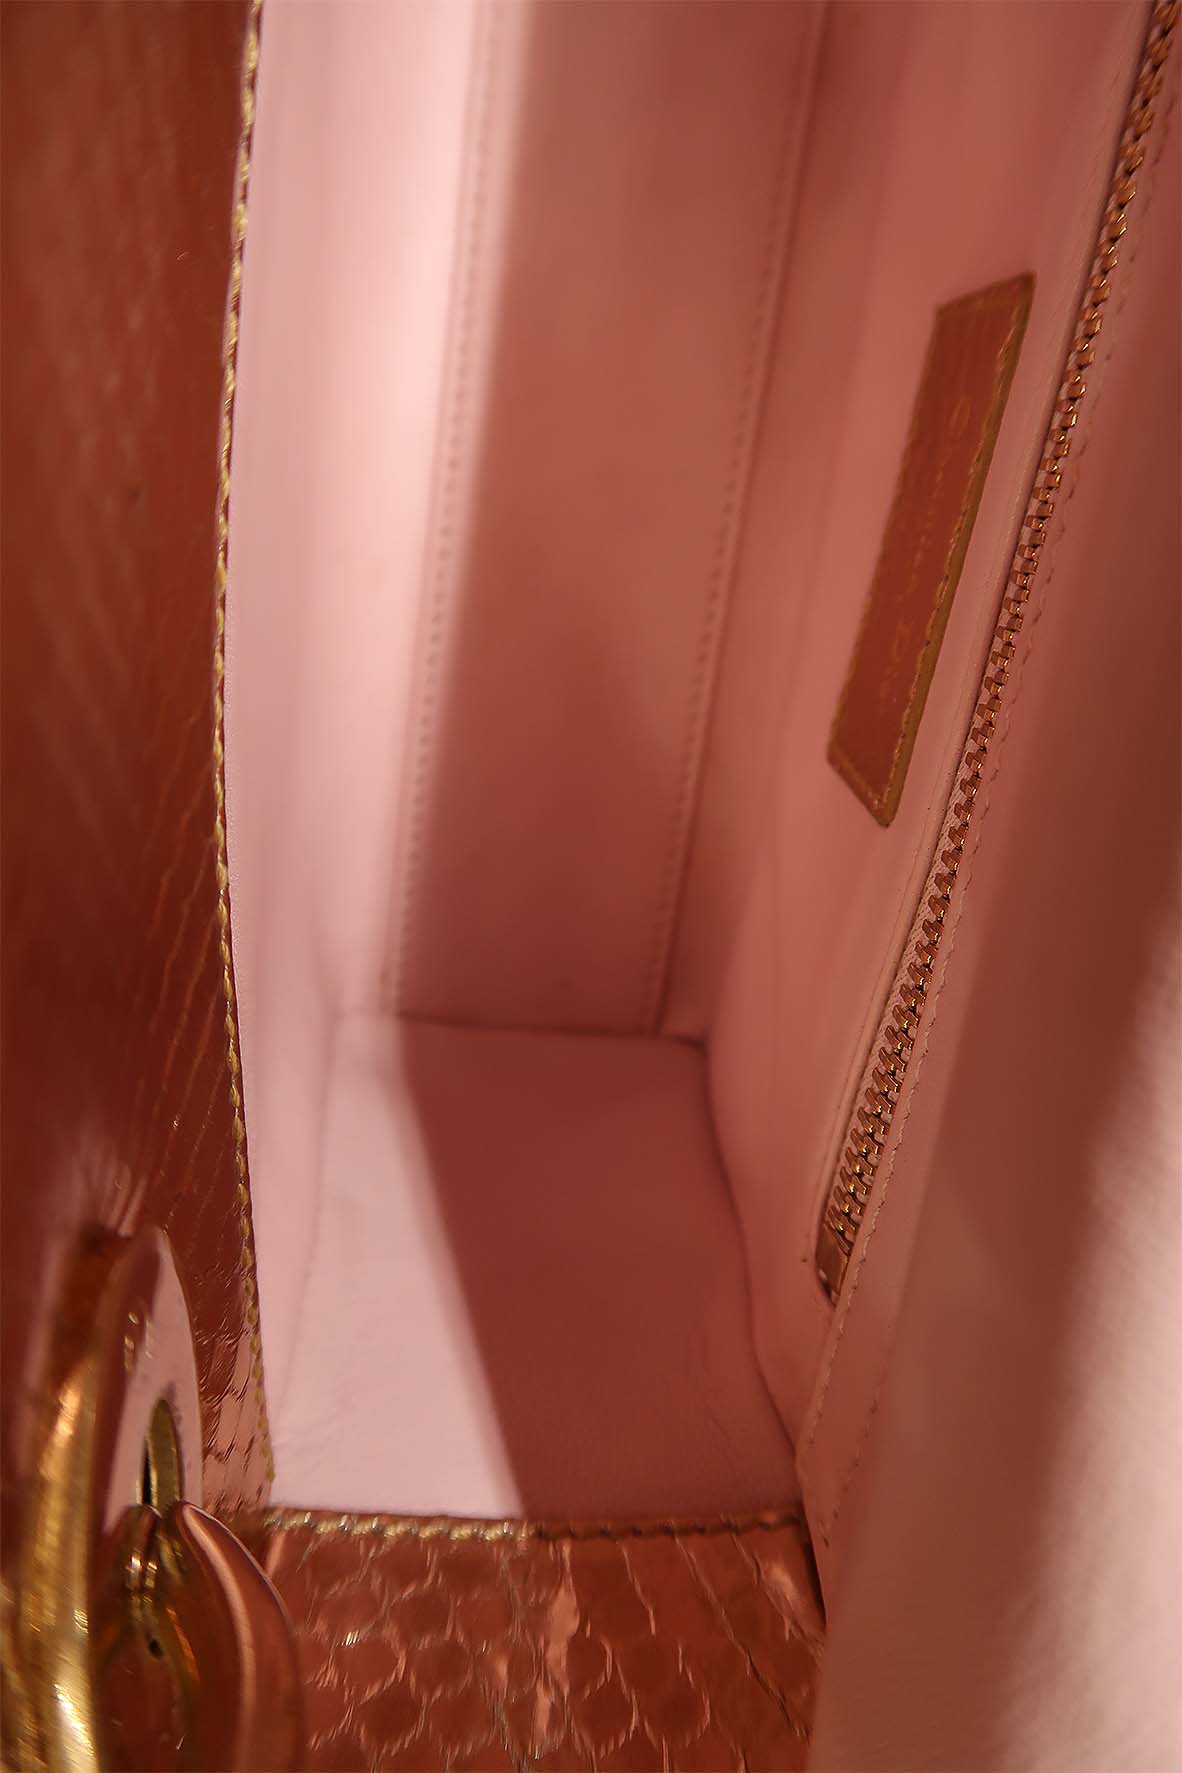 Medium size Lady Dior Metallic Gold/Brown Python skin Lady Dior Tote –  Pragma Valuables